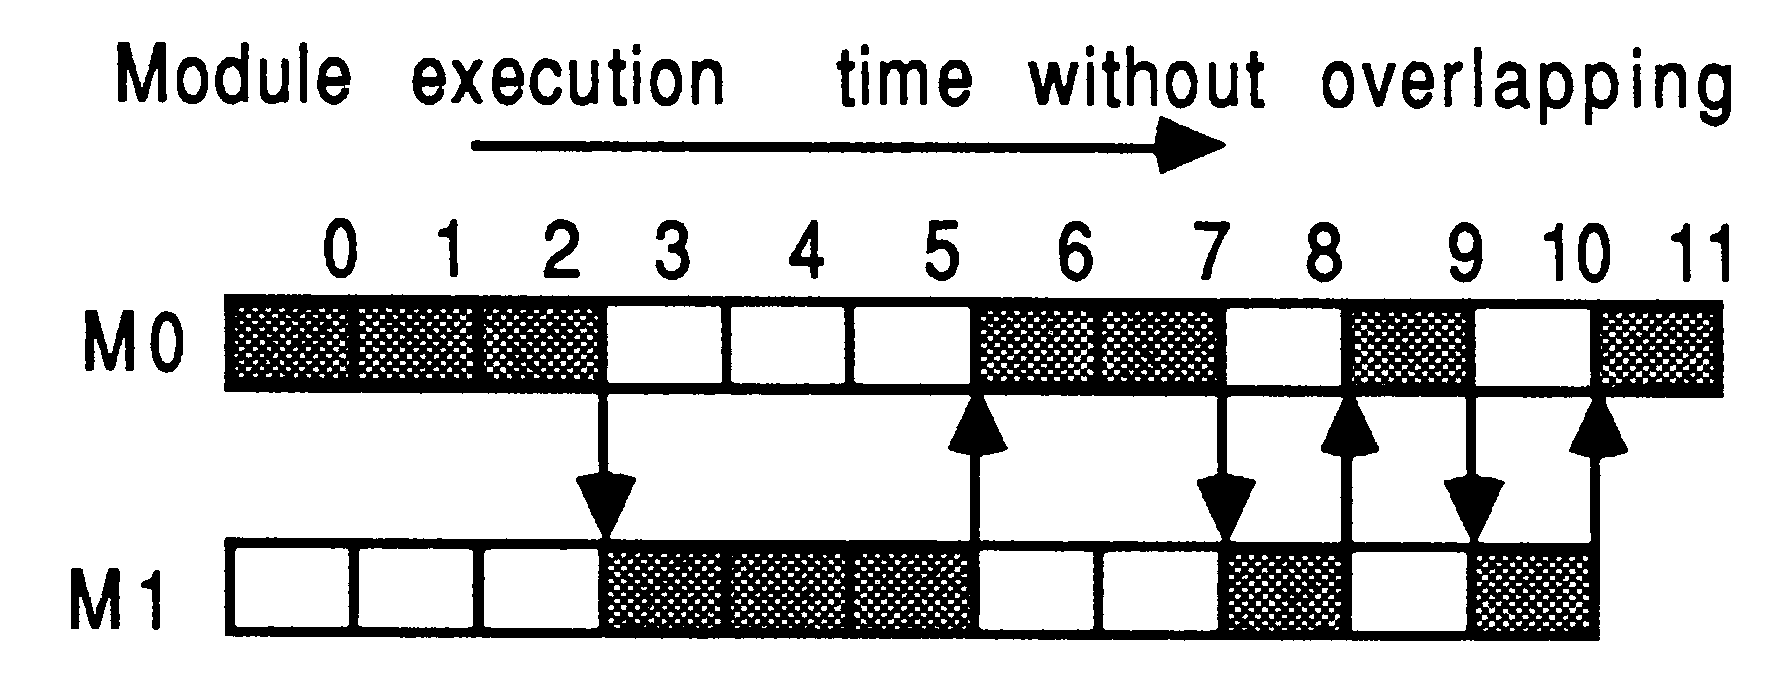 Module execution pattern using
stubs